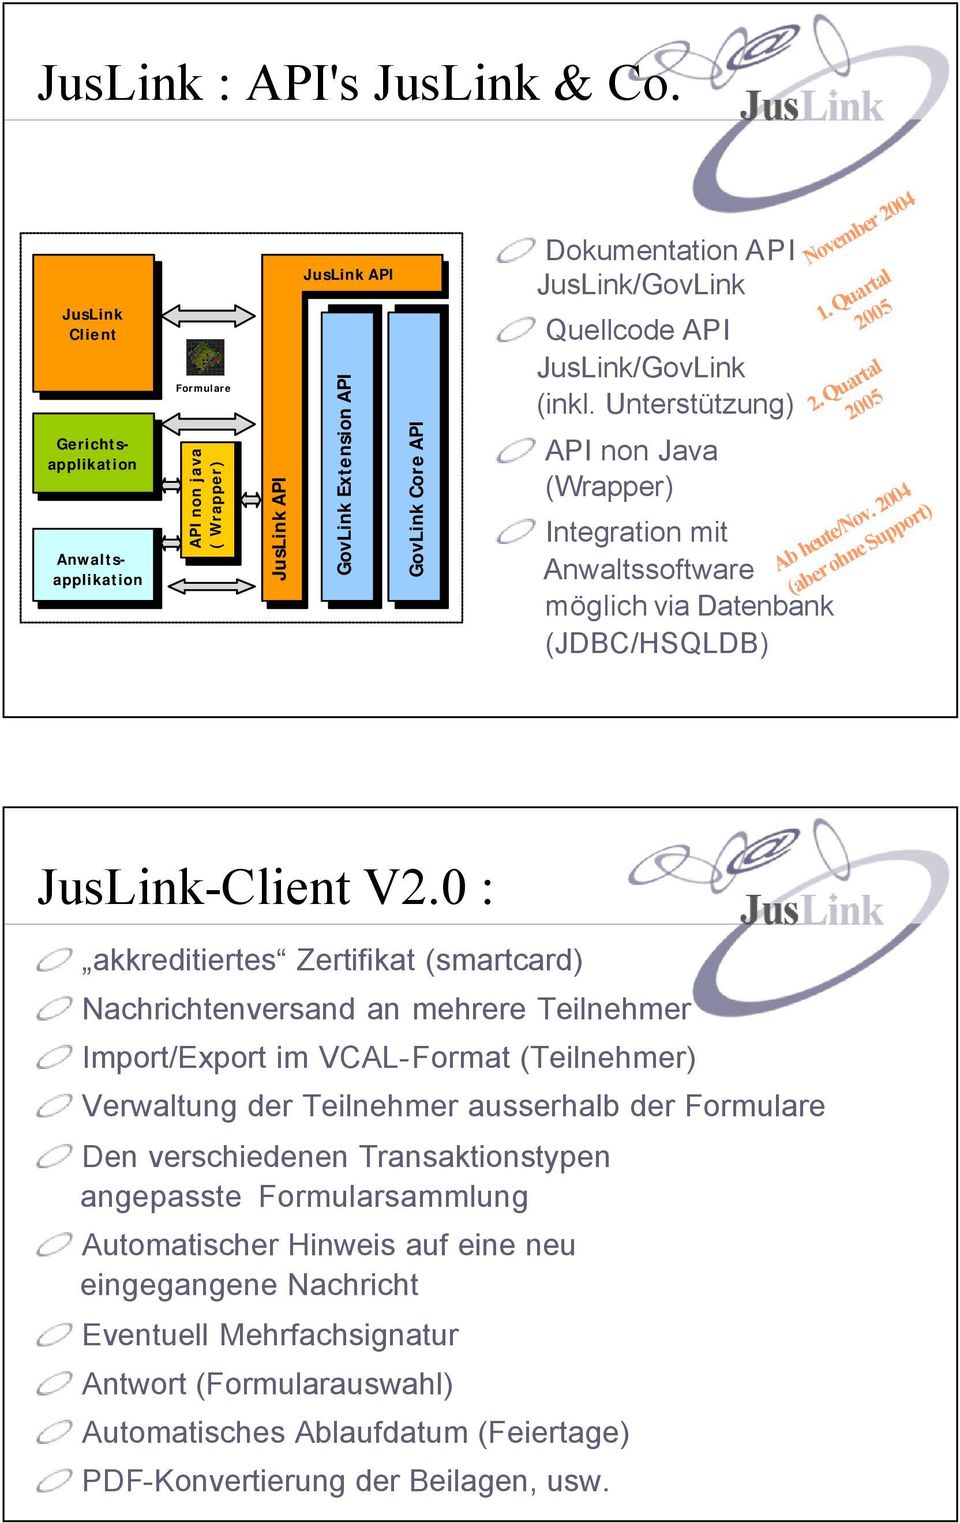 JusLink/GovLink (inkl. Unterstützung) API non Java (Wrapper) Integration mit Anwaltssoftware möglichvia Datenbank (JDBC/HSQLDB) November 2004 1. Quartal 2005 2. Quartal 2005 Ab heute/nov.